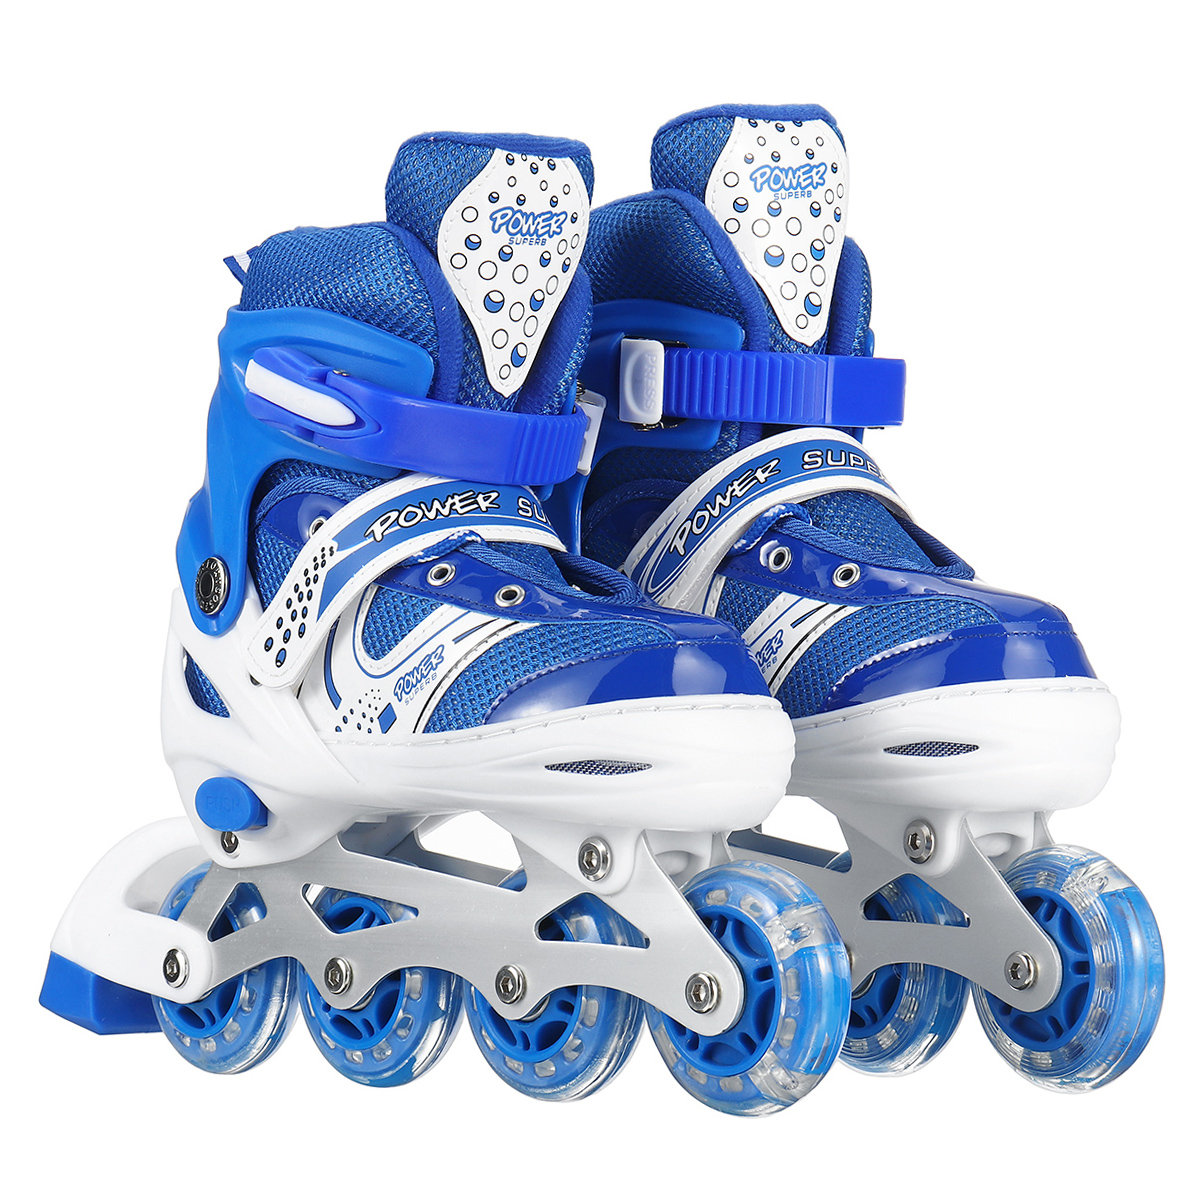 Childrens-Adjustable-Skates-Full-Set-Single-Flash-Ice-Skate-Shoes-for-Boys-and-Girls-Inline-Skates-f-1697070-10